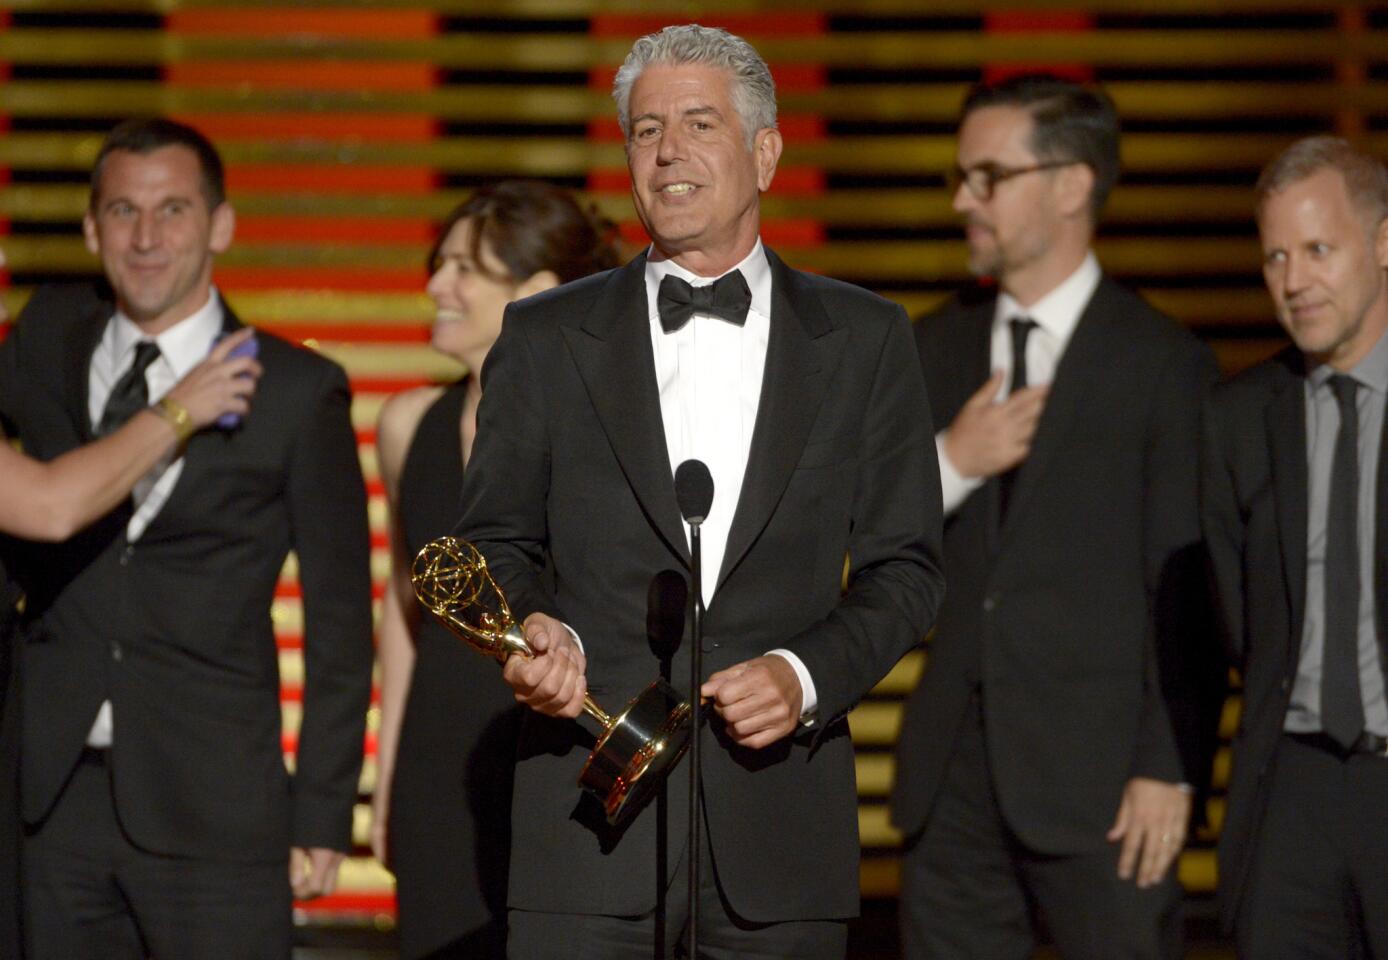 Emmys 2014